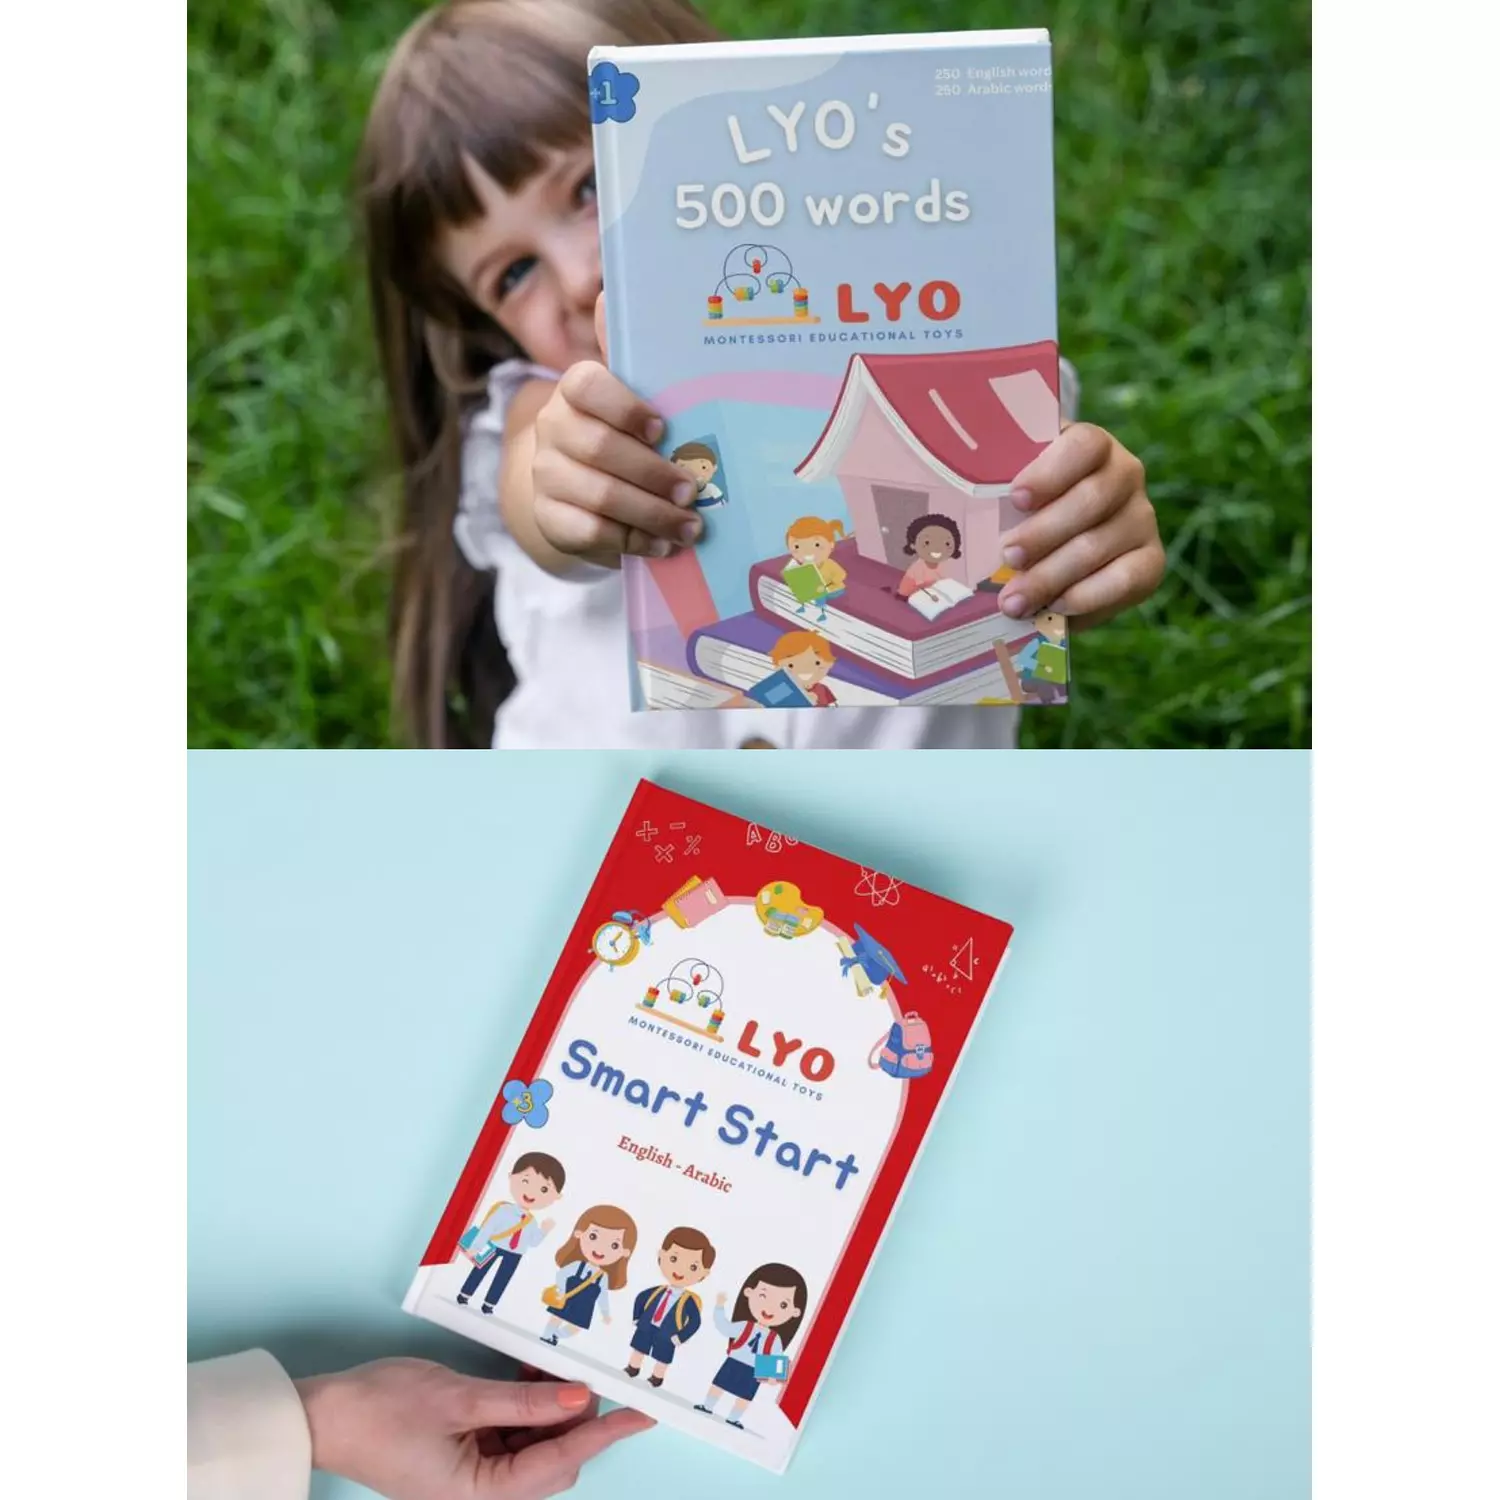 LYO Smart Start + LYO’s 500 Words (2 Books) 11